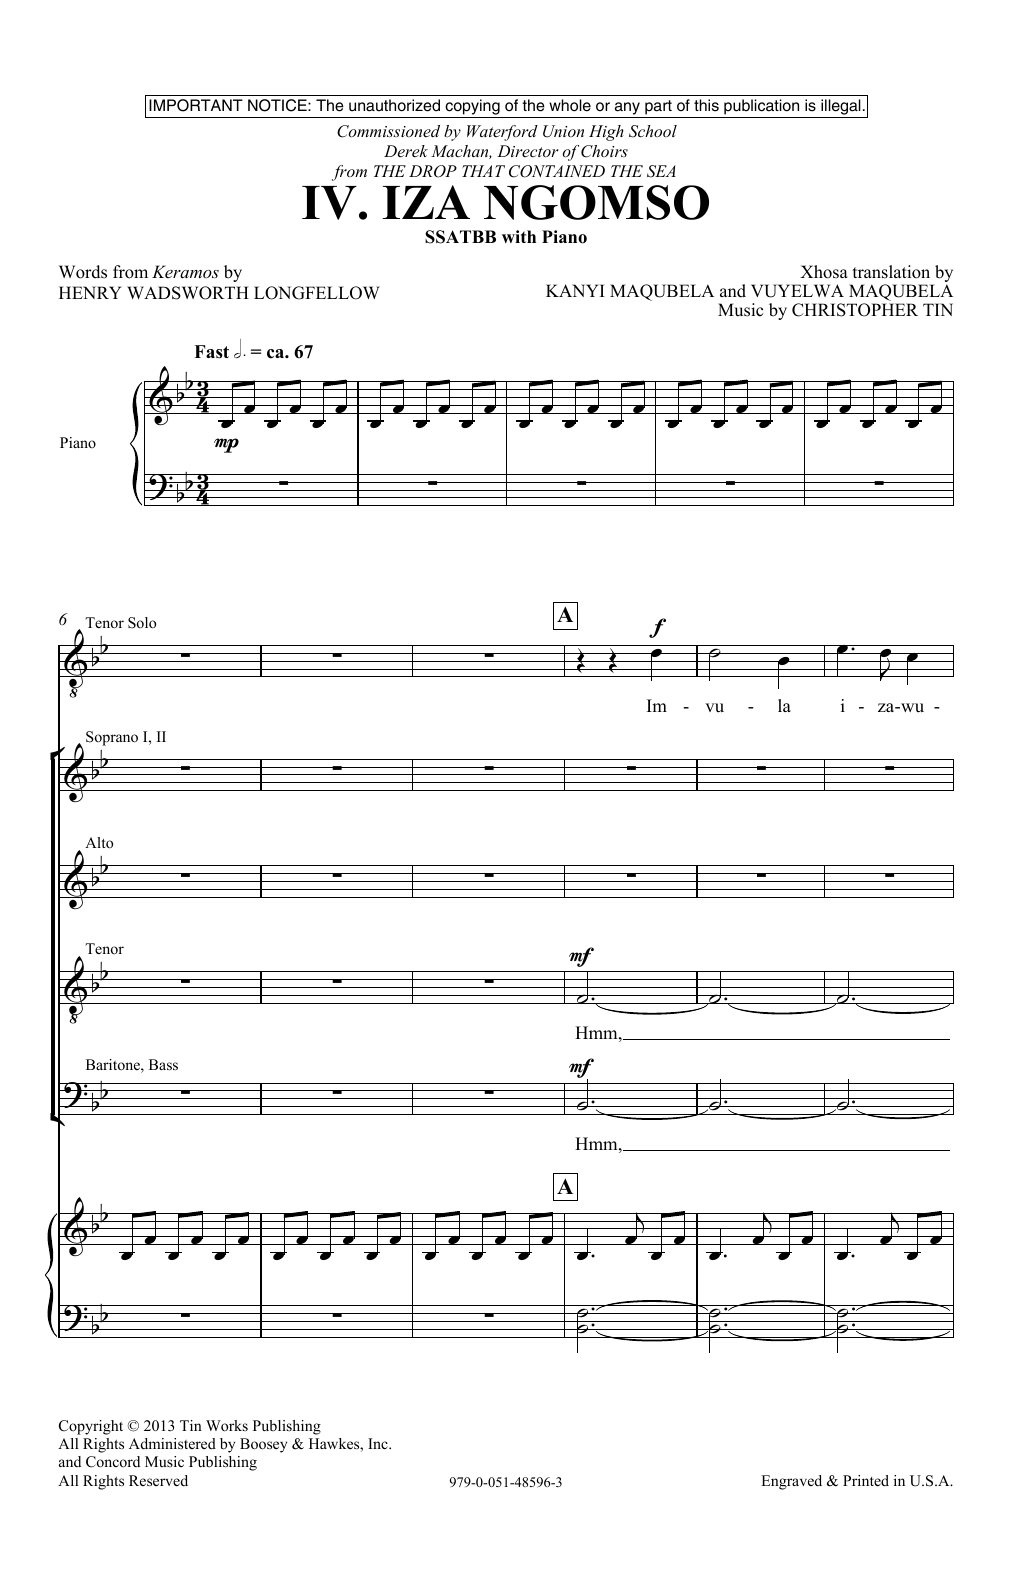 Christopher Tin Iza Ngomso Sheet Music Notes & Chords for SATB Choir - Download or Print PDF